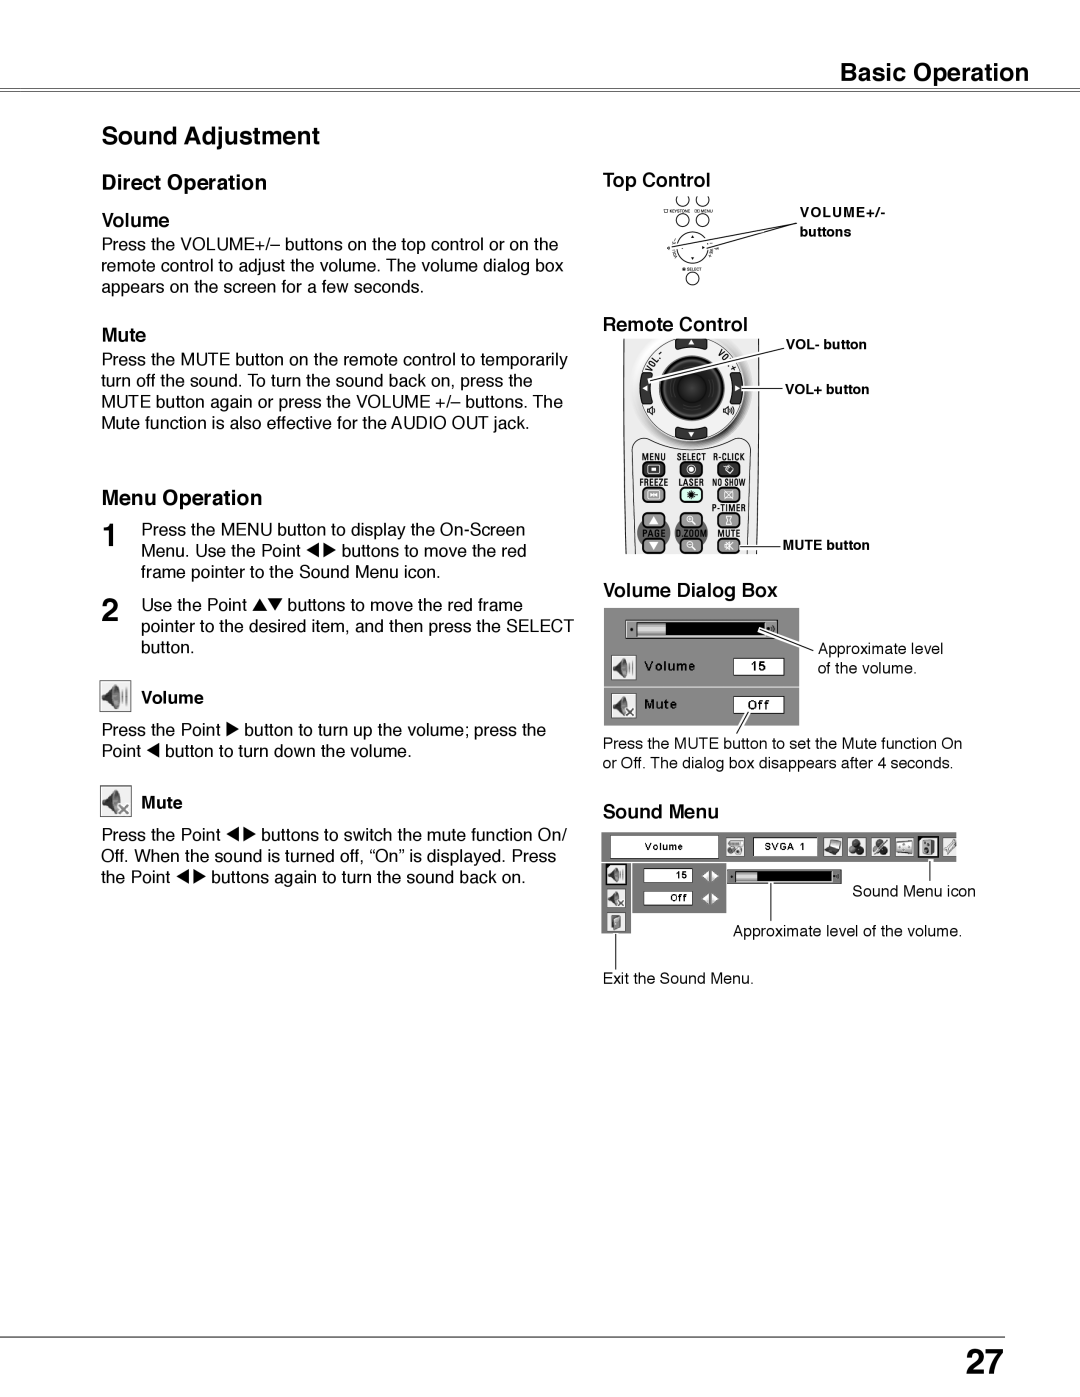 Eiki LC-WB40N Sound Adjustment, Direct Operation, Menu Operation, Mute, Volume Dialog Box, Sound Menu, Basic Operation 